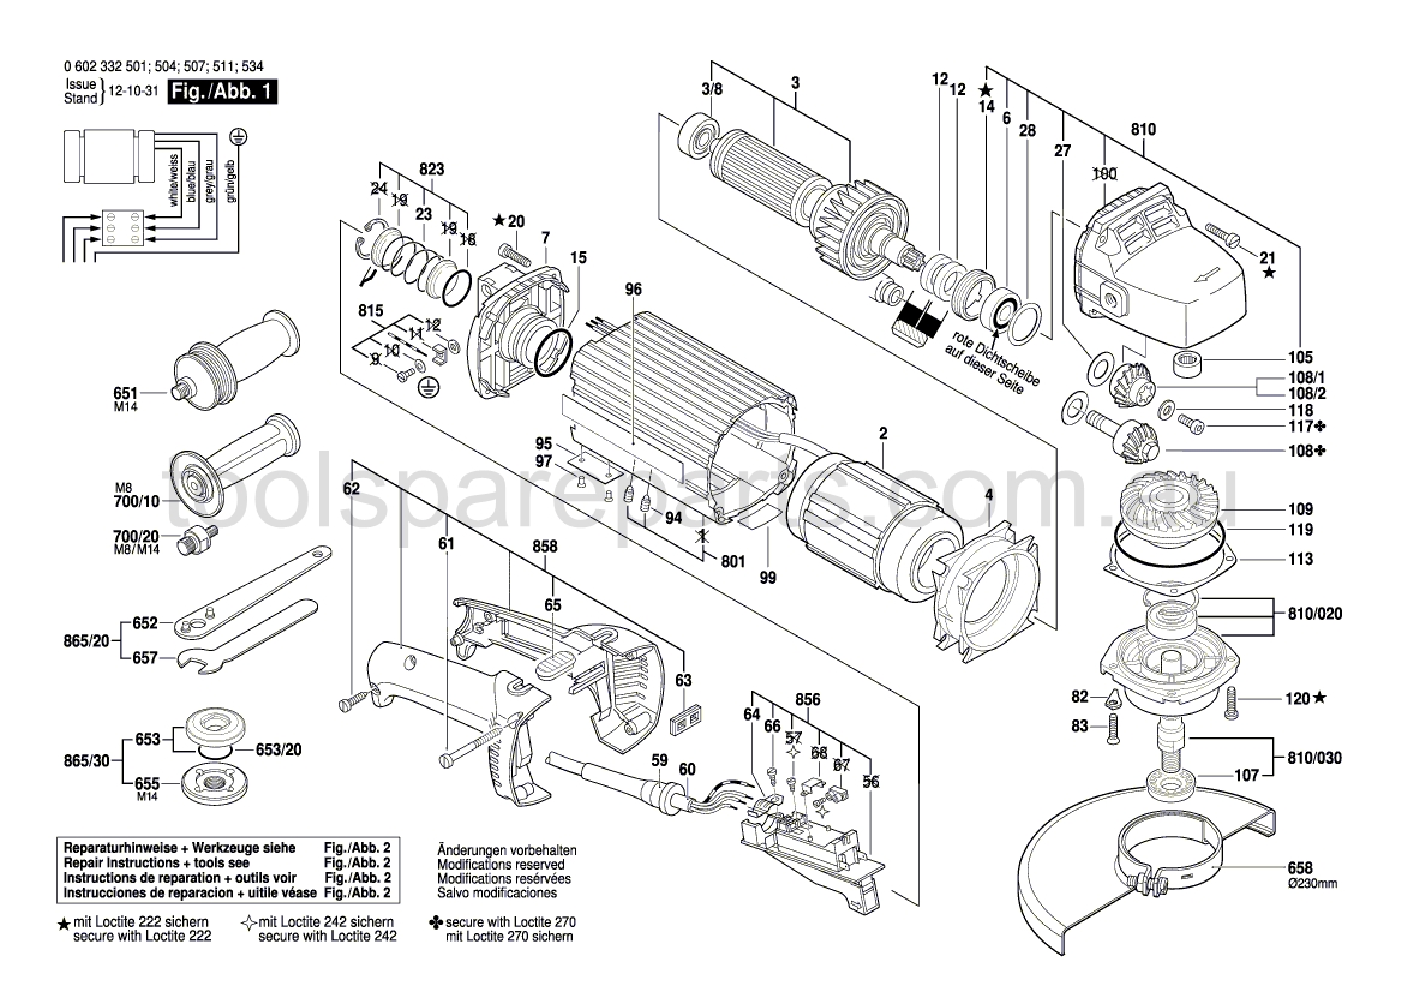 Bosch HWS 88/230 0602332507  Diagram 1